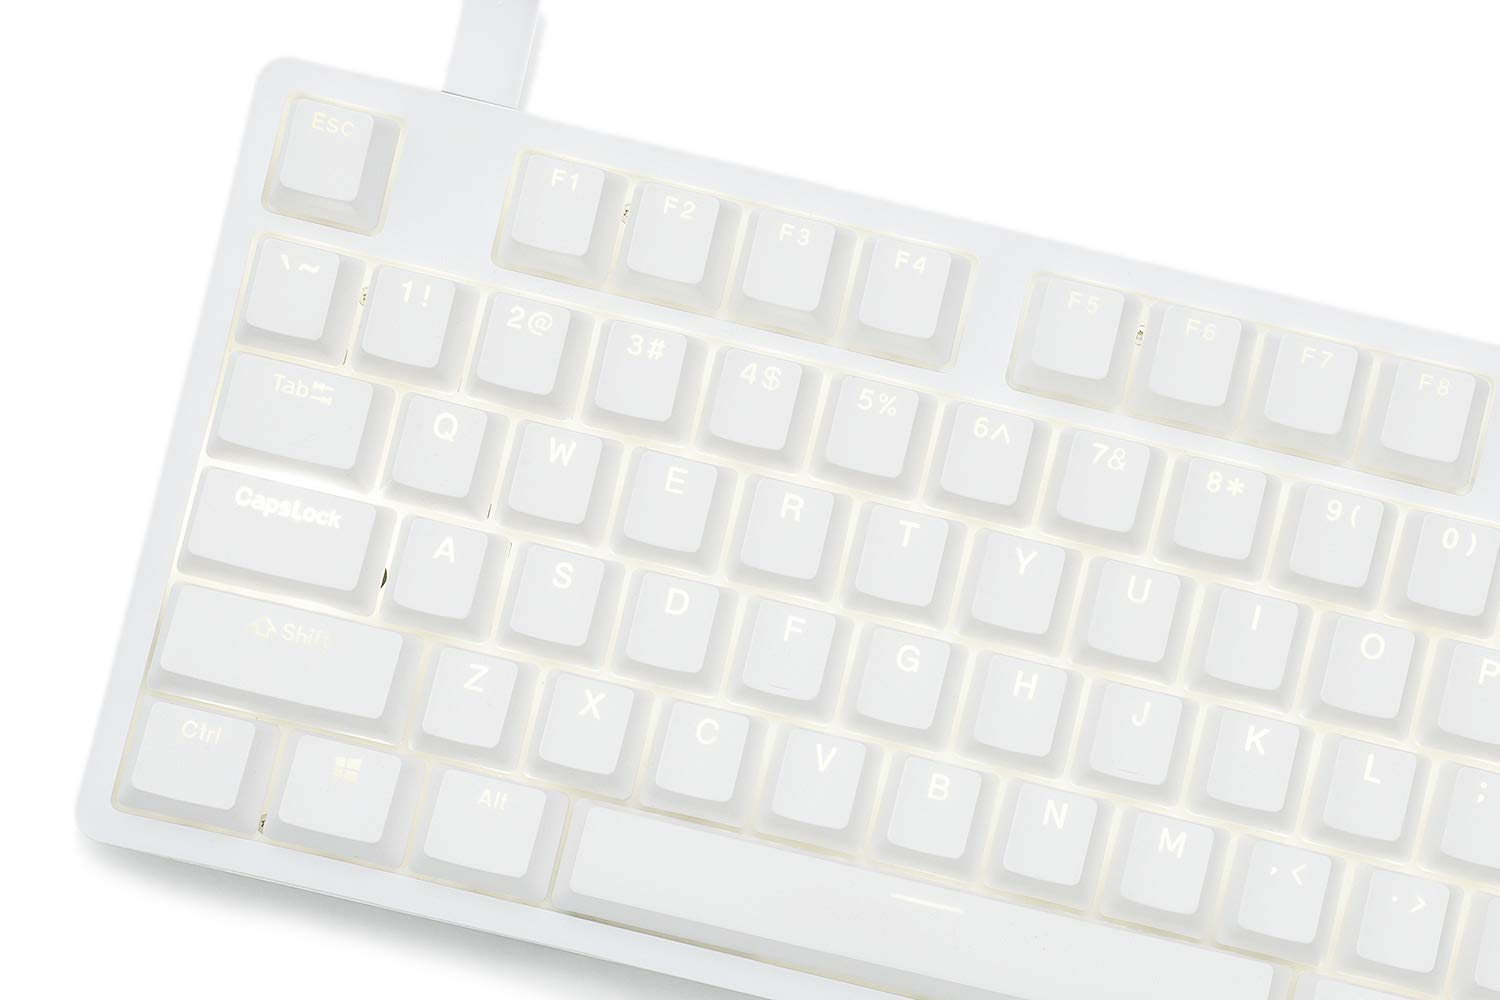 DROP ENTR Mechanical Keyboard - Tenkeyless Aluminum Case, Doubleshot Shine-Through PBT Keycaps, N-Key Rollover, USB-C, White Backlit LED, Fast & Linear Switches (Silver/White, Gateron Yellow)